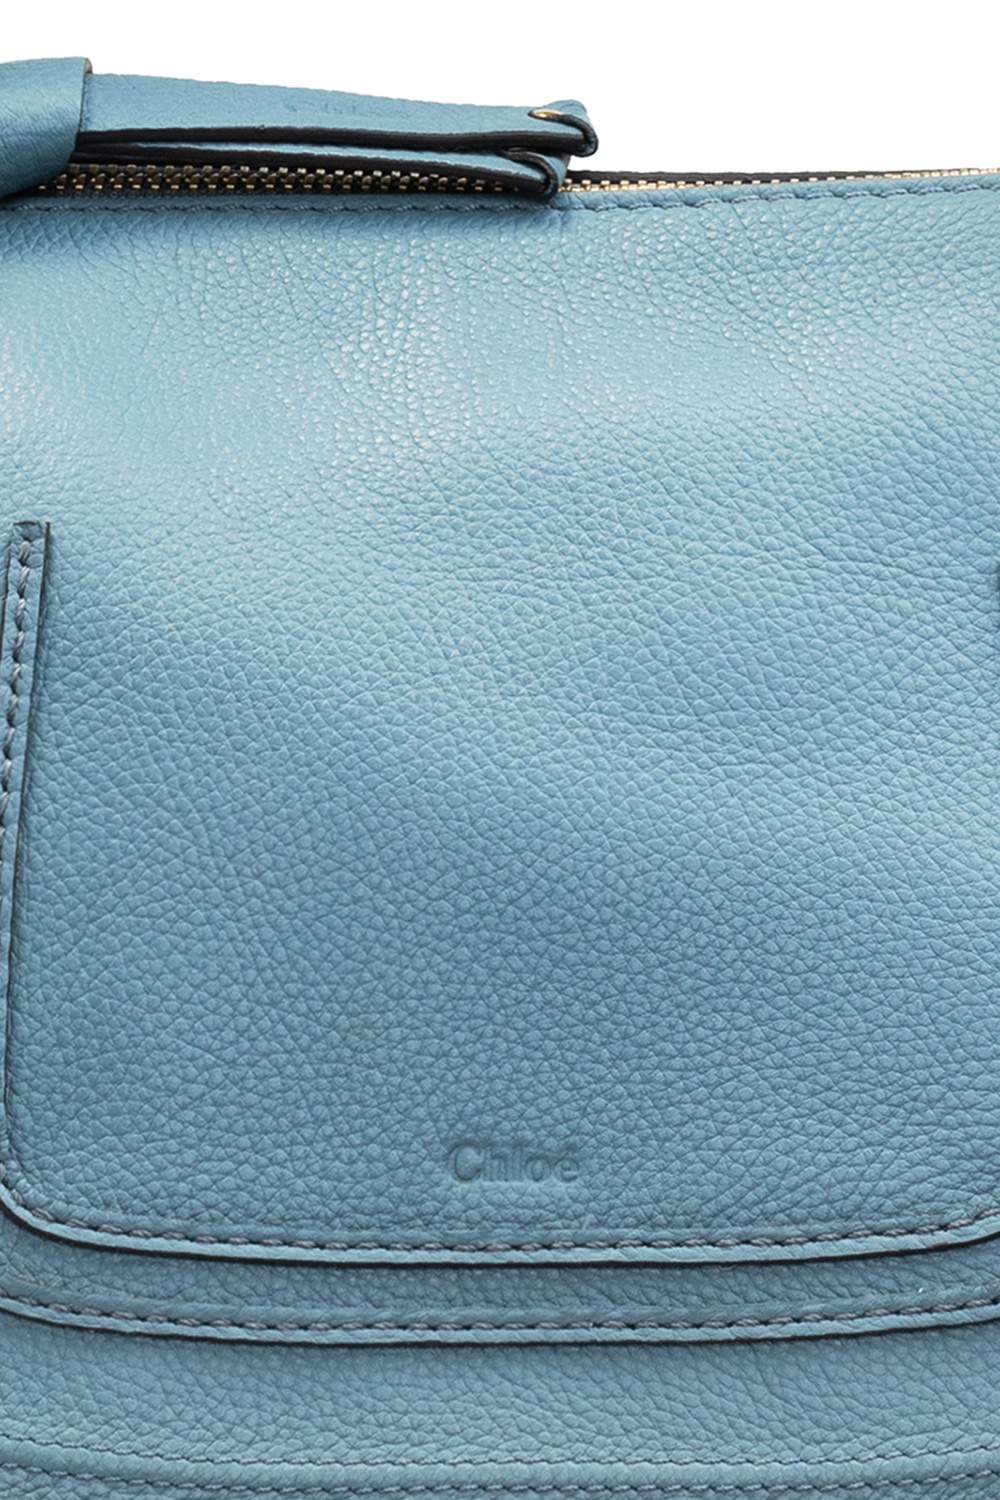 Joy Shoulder Bag - Steel Blue Online Shopping - JW Pei